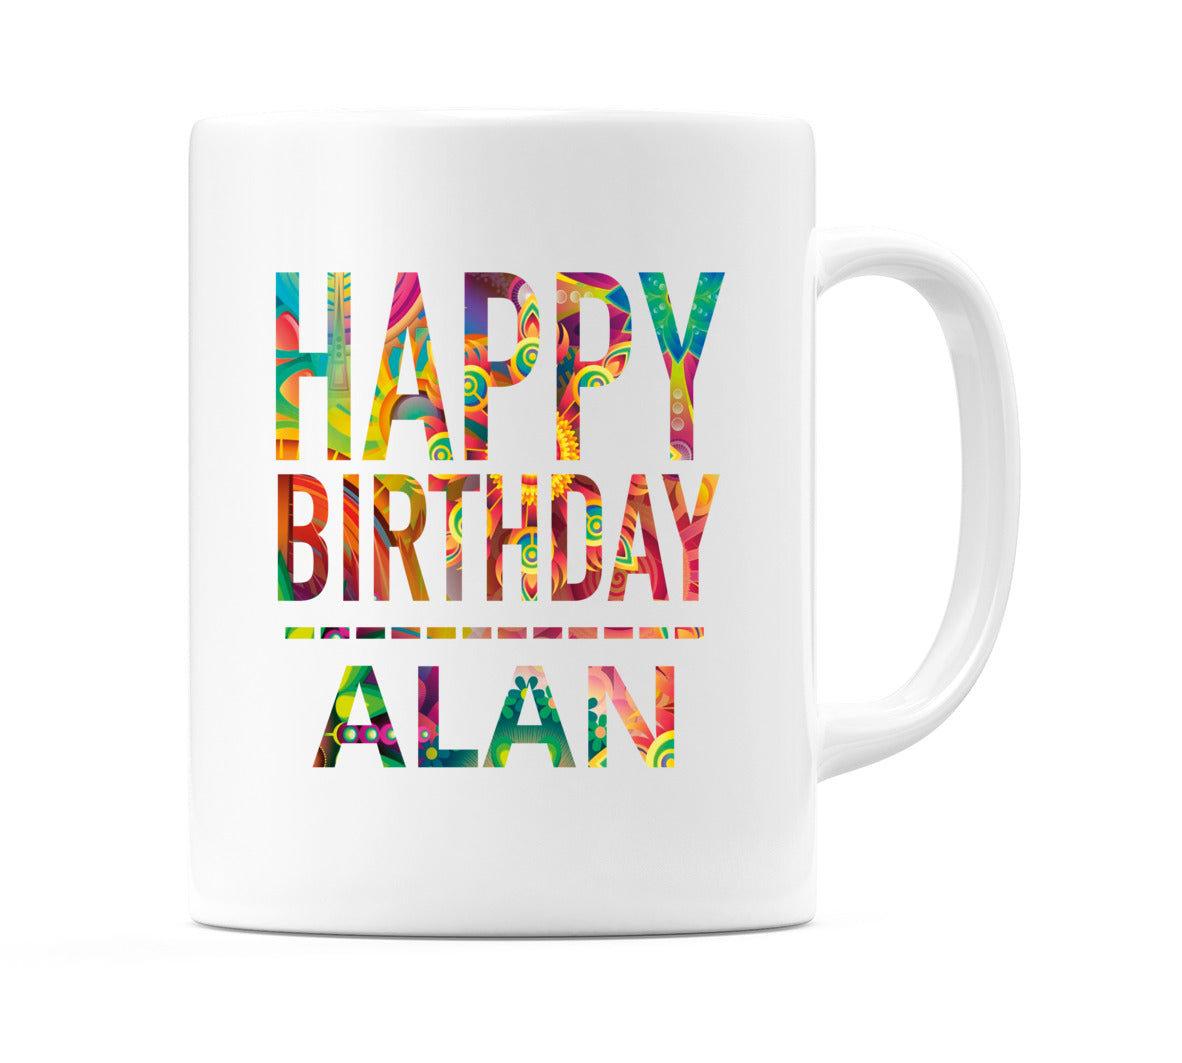 Happy Birthday Alan (Tie Dye Effect) Mug Cup by WeDoMugs